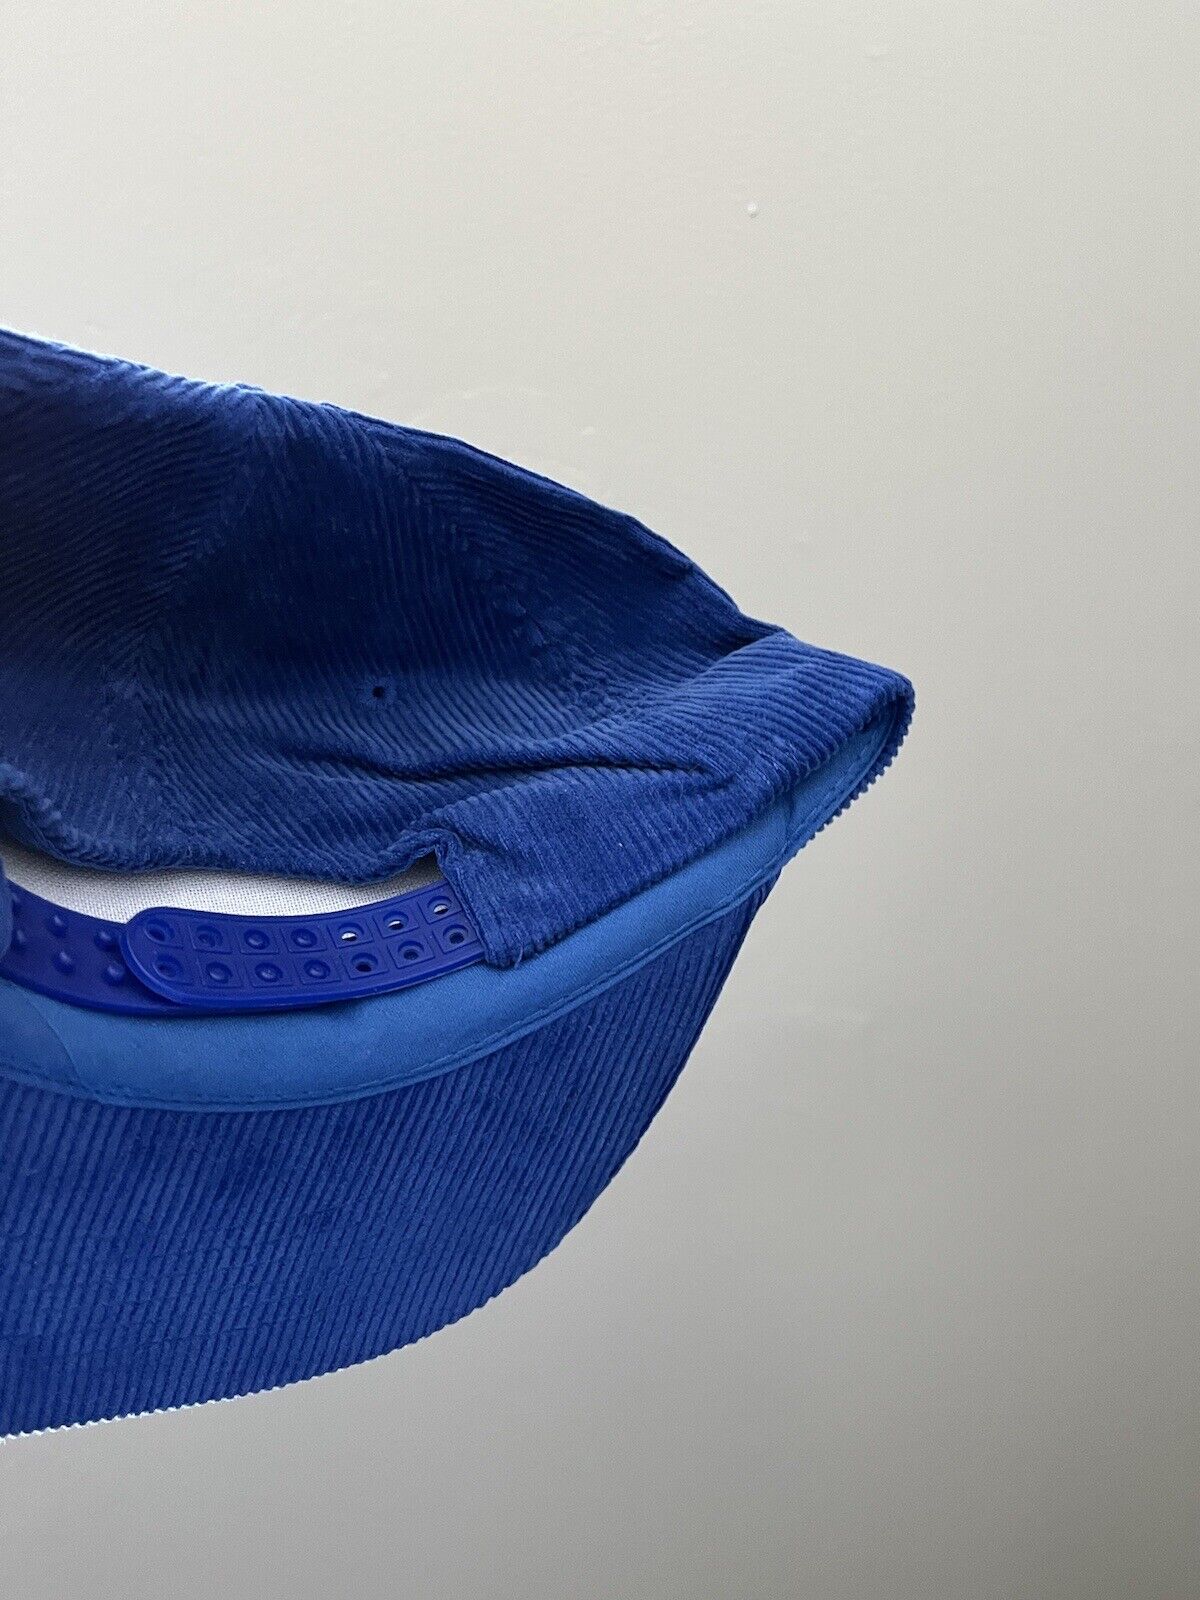 Vintage Blue Corduroy Trucker Hat - image 5